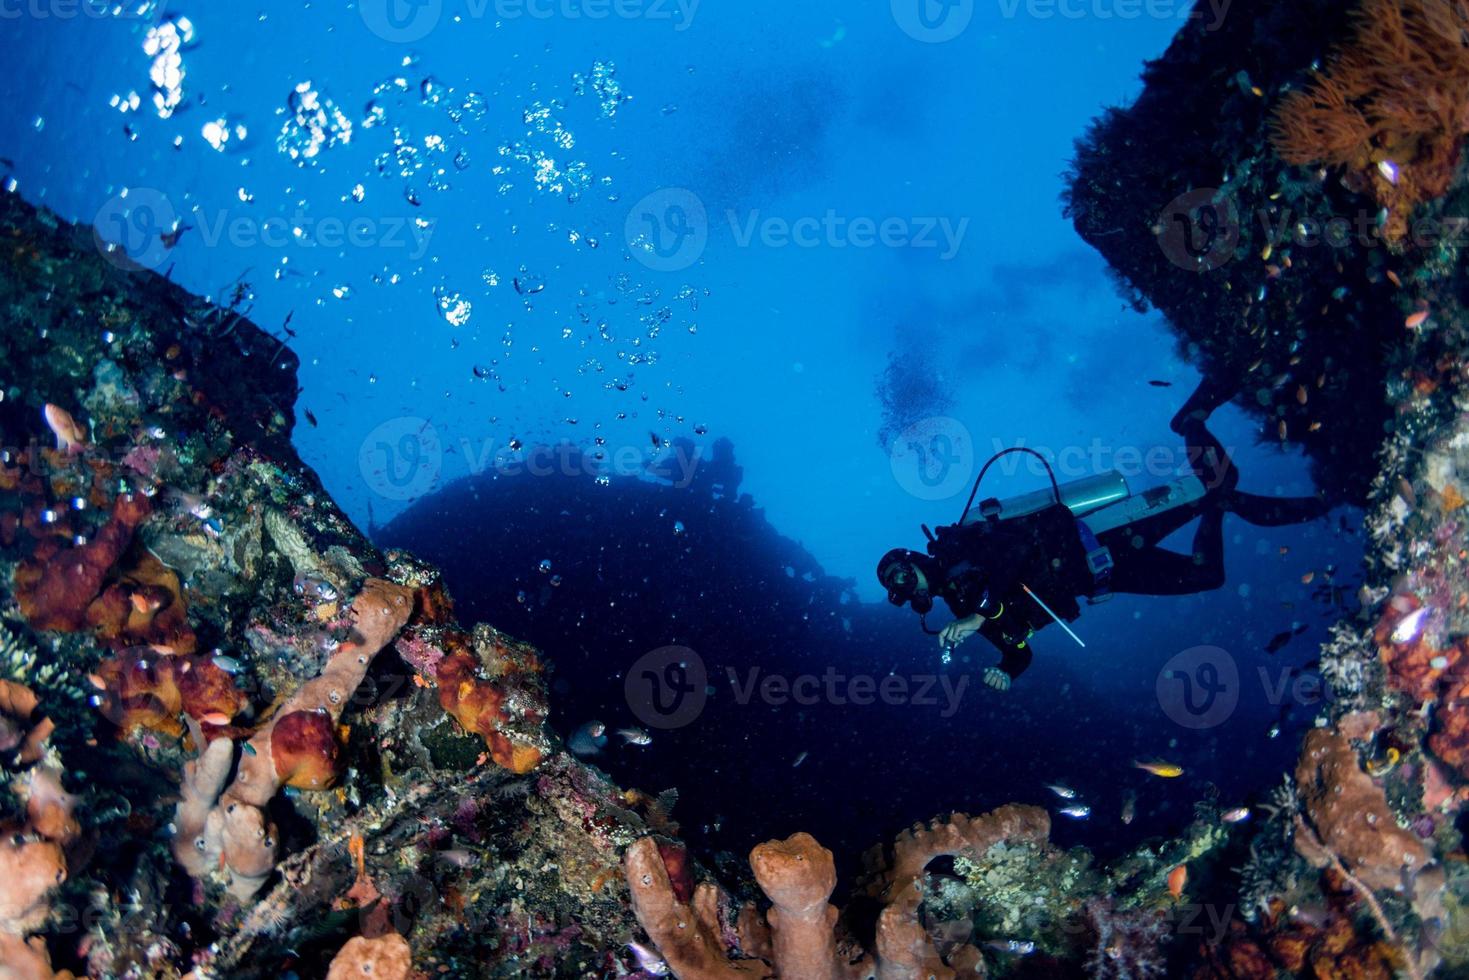 Scuba diver underwater near giant sponge in the ocean photo